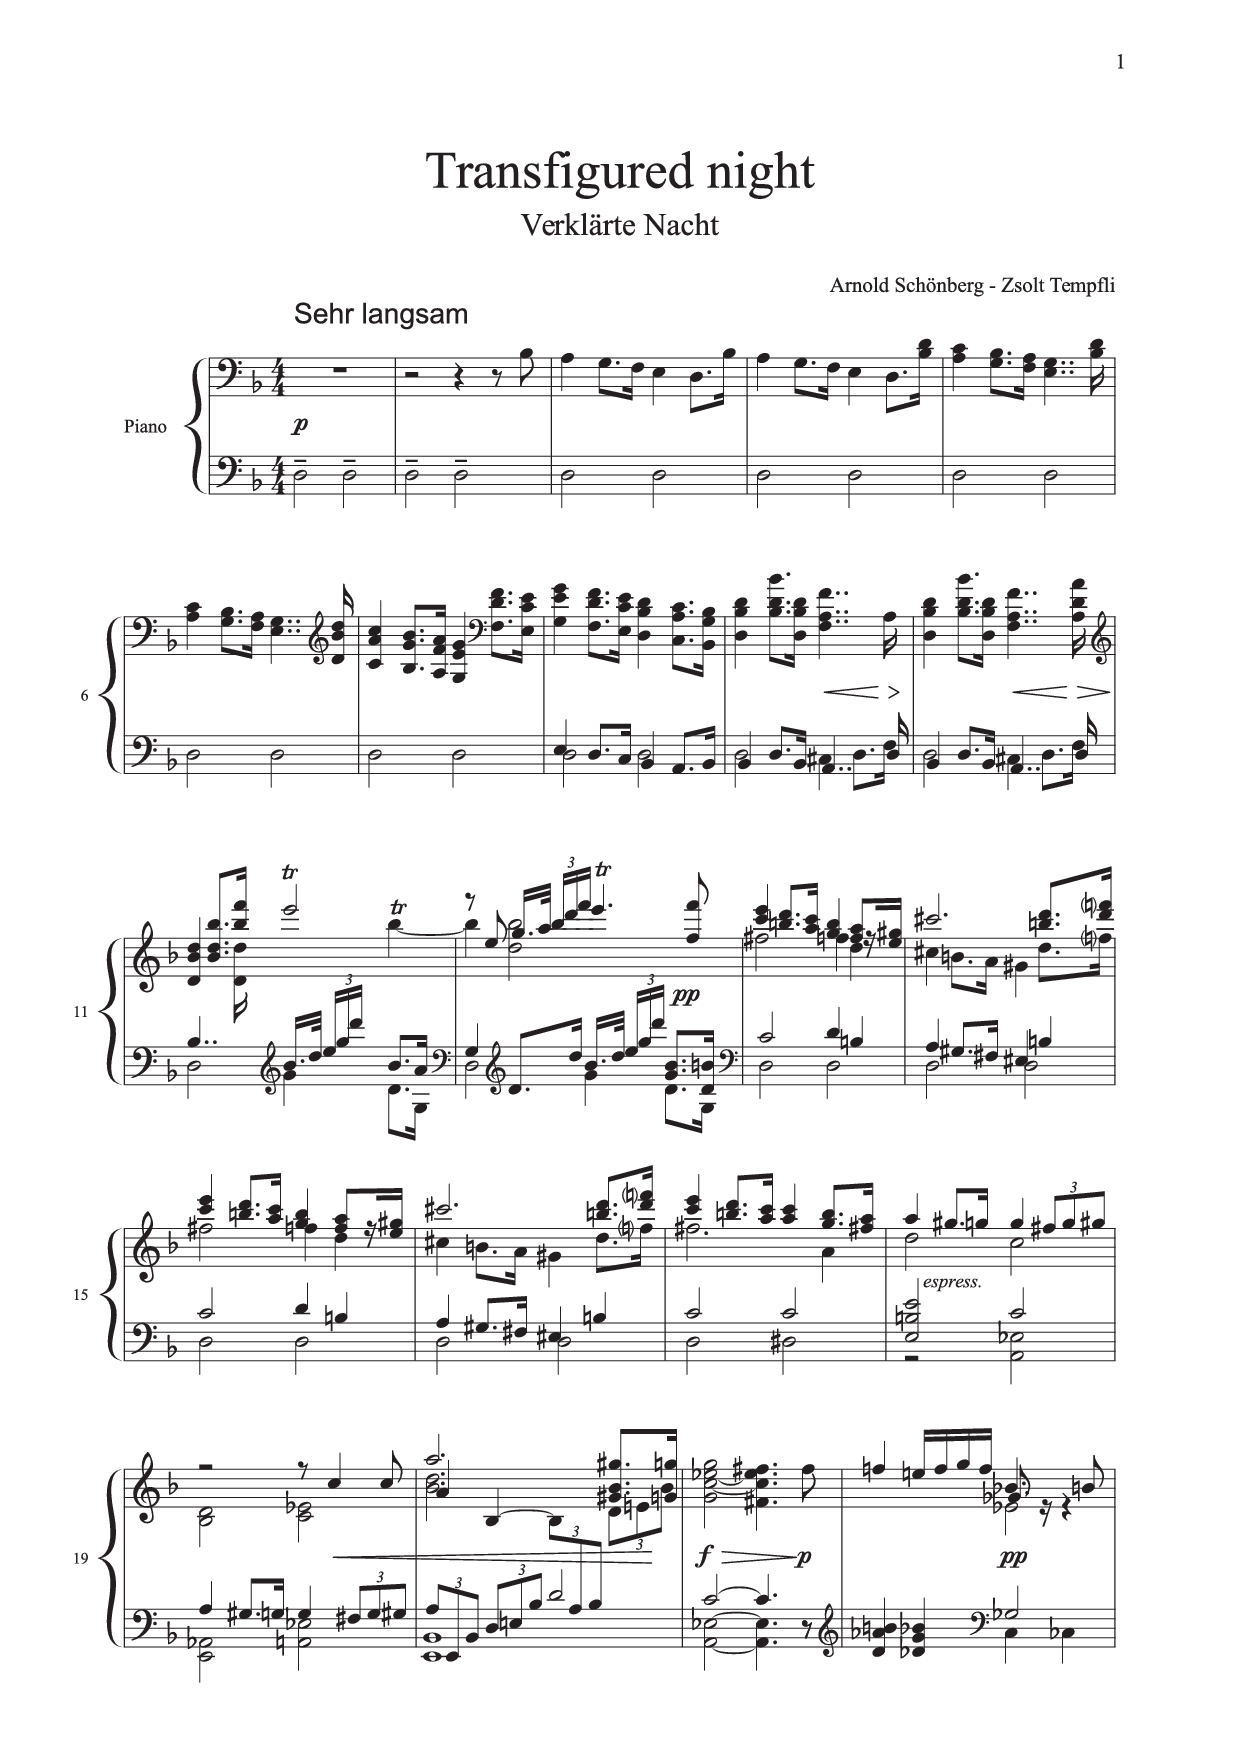 Arnold Schoenberg - Zsolt Tempfli: Transfigured Night piano transcription (op. 30)